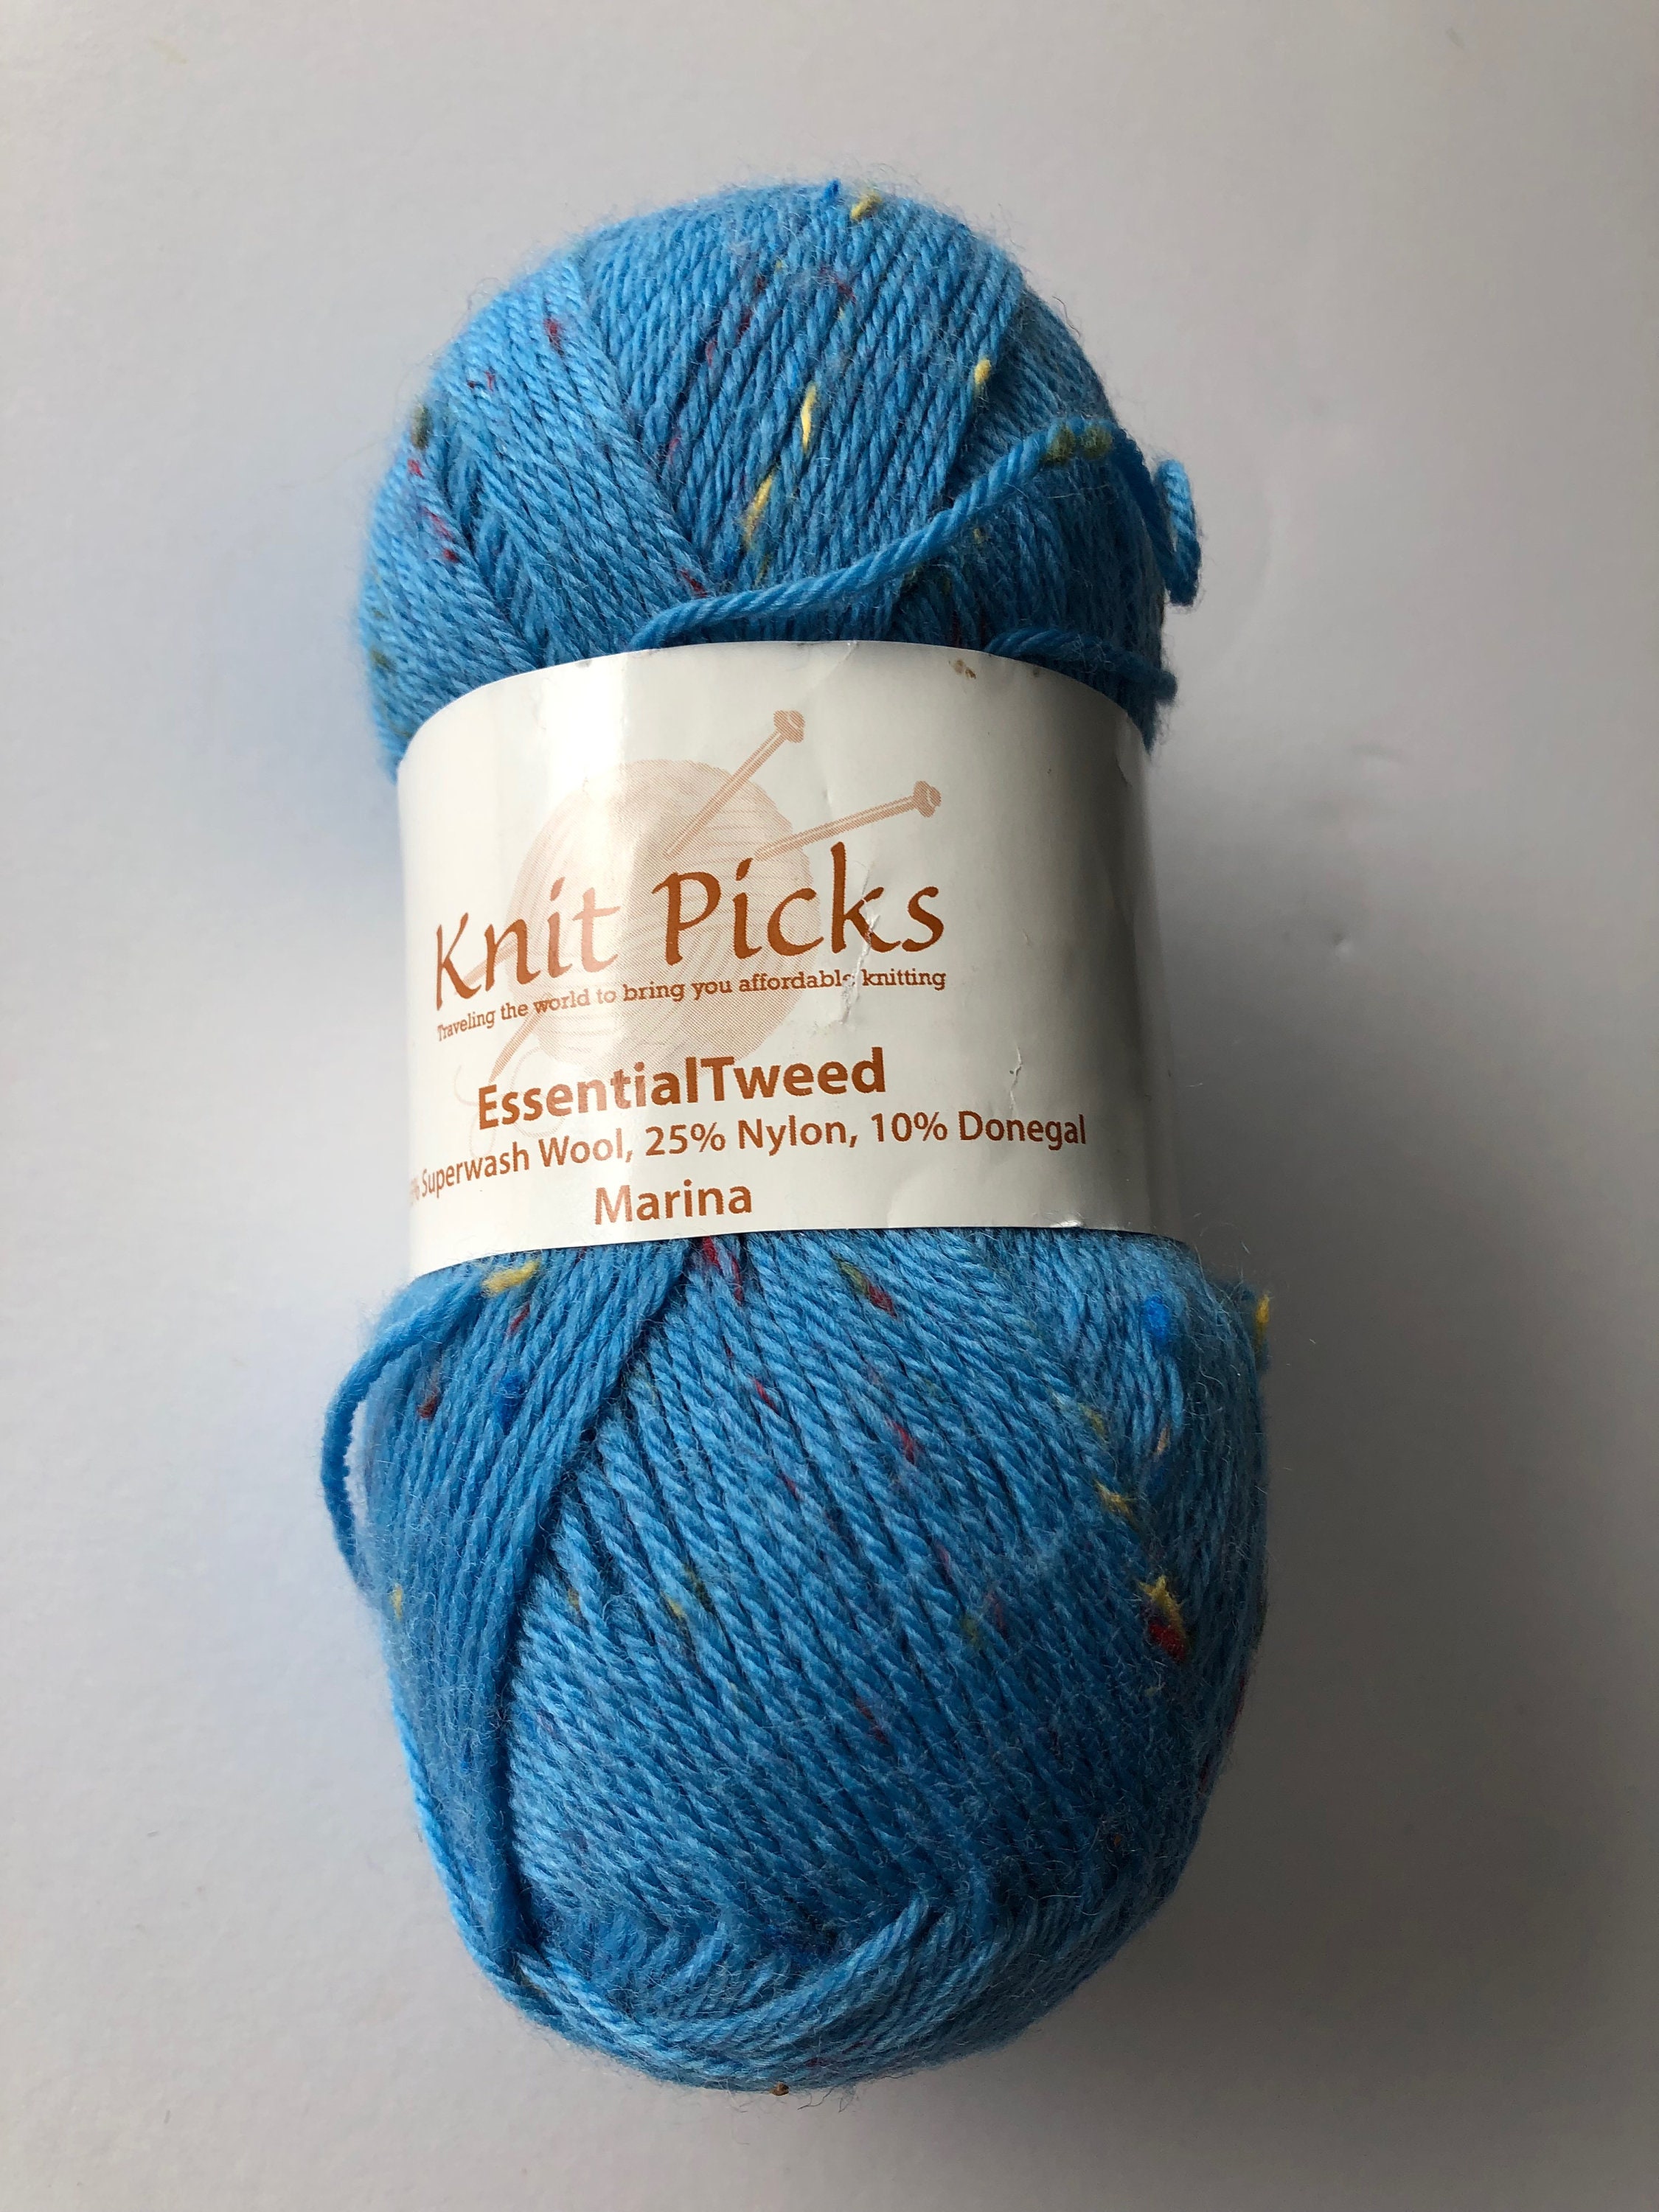 Discontinued Yarn Knit Picks Essential Tweed Sock Yarn in Marina Color,  Light Blue Sock Yarn 